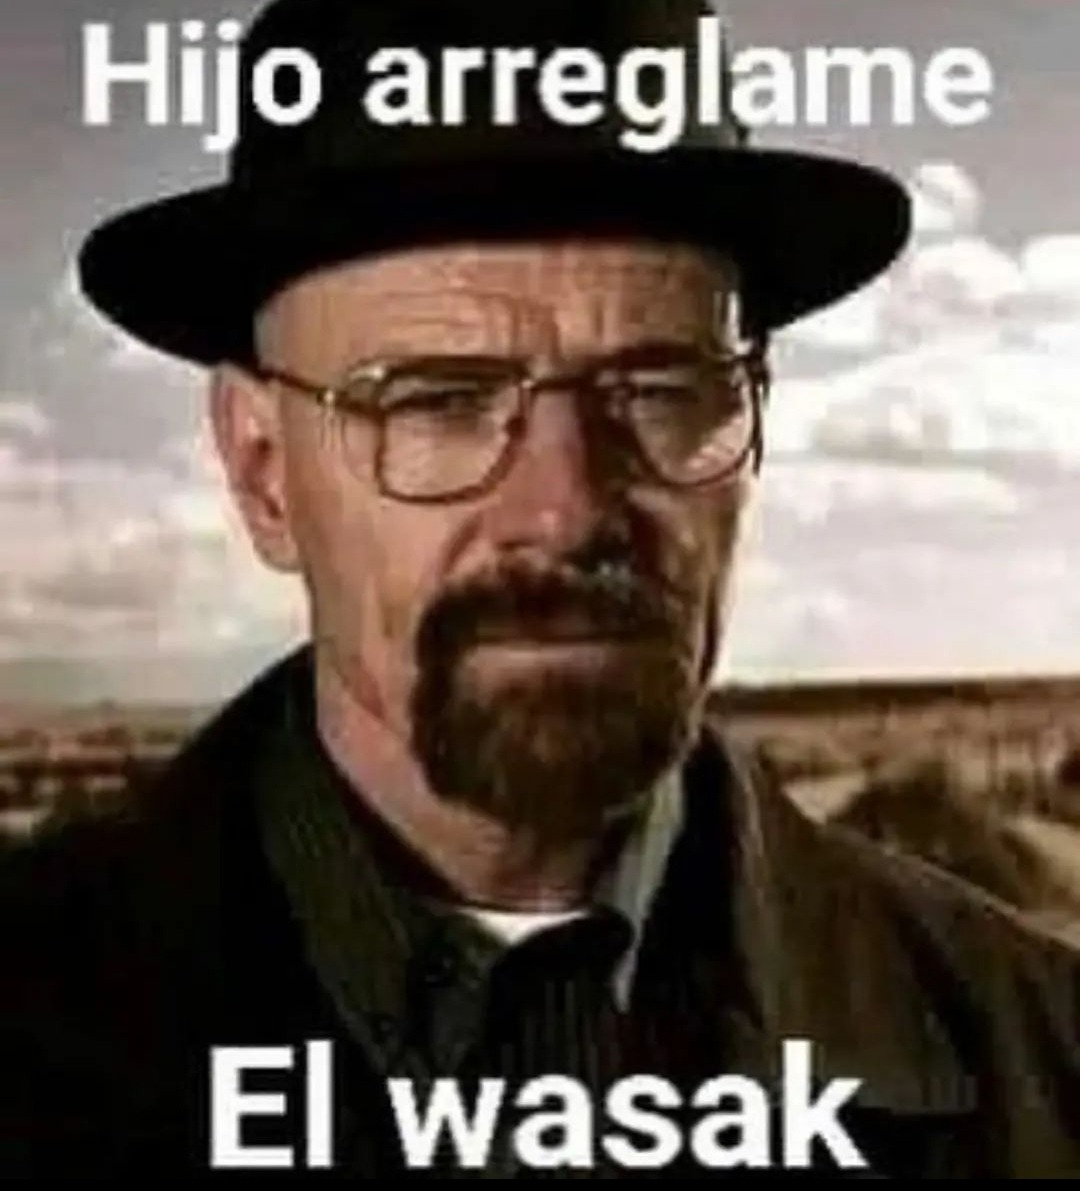 el wasak - meme